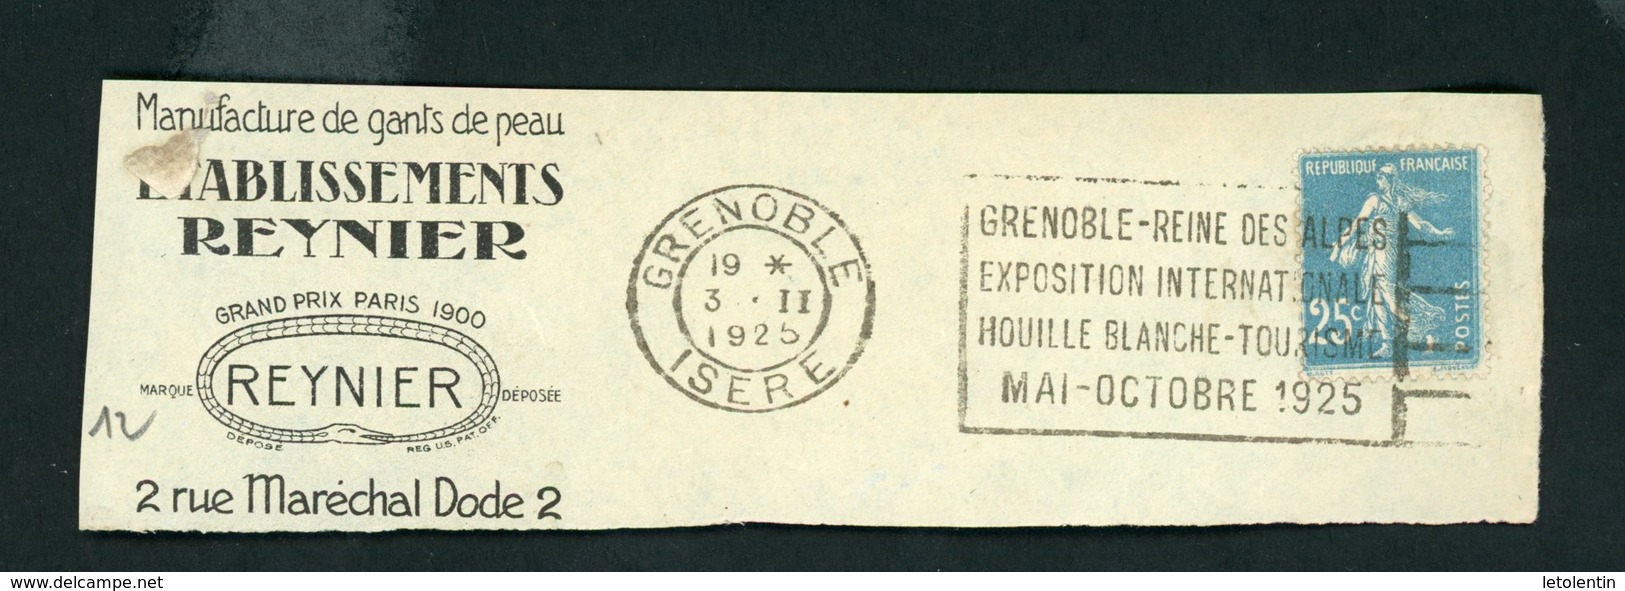 FLAMME "GRENOBLE - REINE DES ALPES EXPOSITION INTERNATIONALE HOUILLE BLANCHE - TOURISME MAI-OCTOBRE 1925" DE GRENOBLE 1 - Sellados Mecánicos (Publicitario)